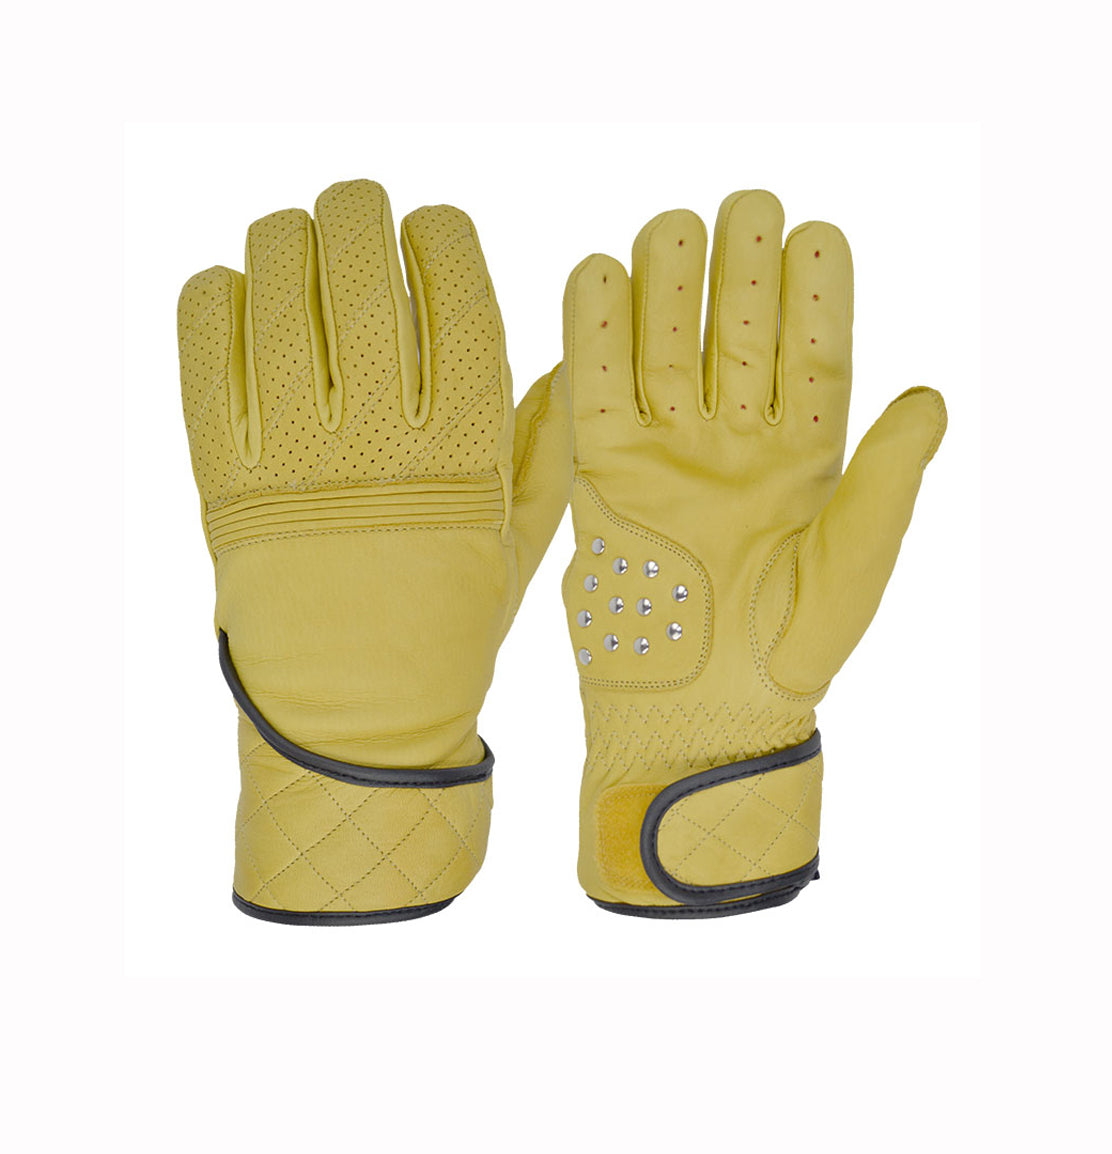 Goldtop Flat tracker motorcycle gloves